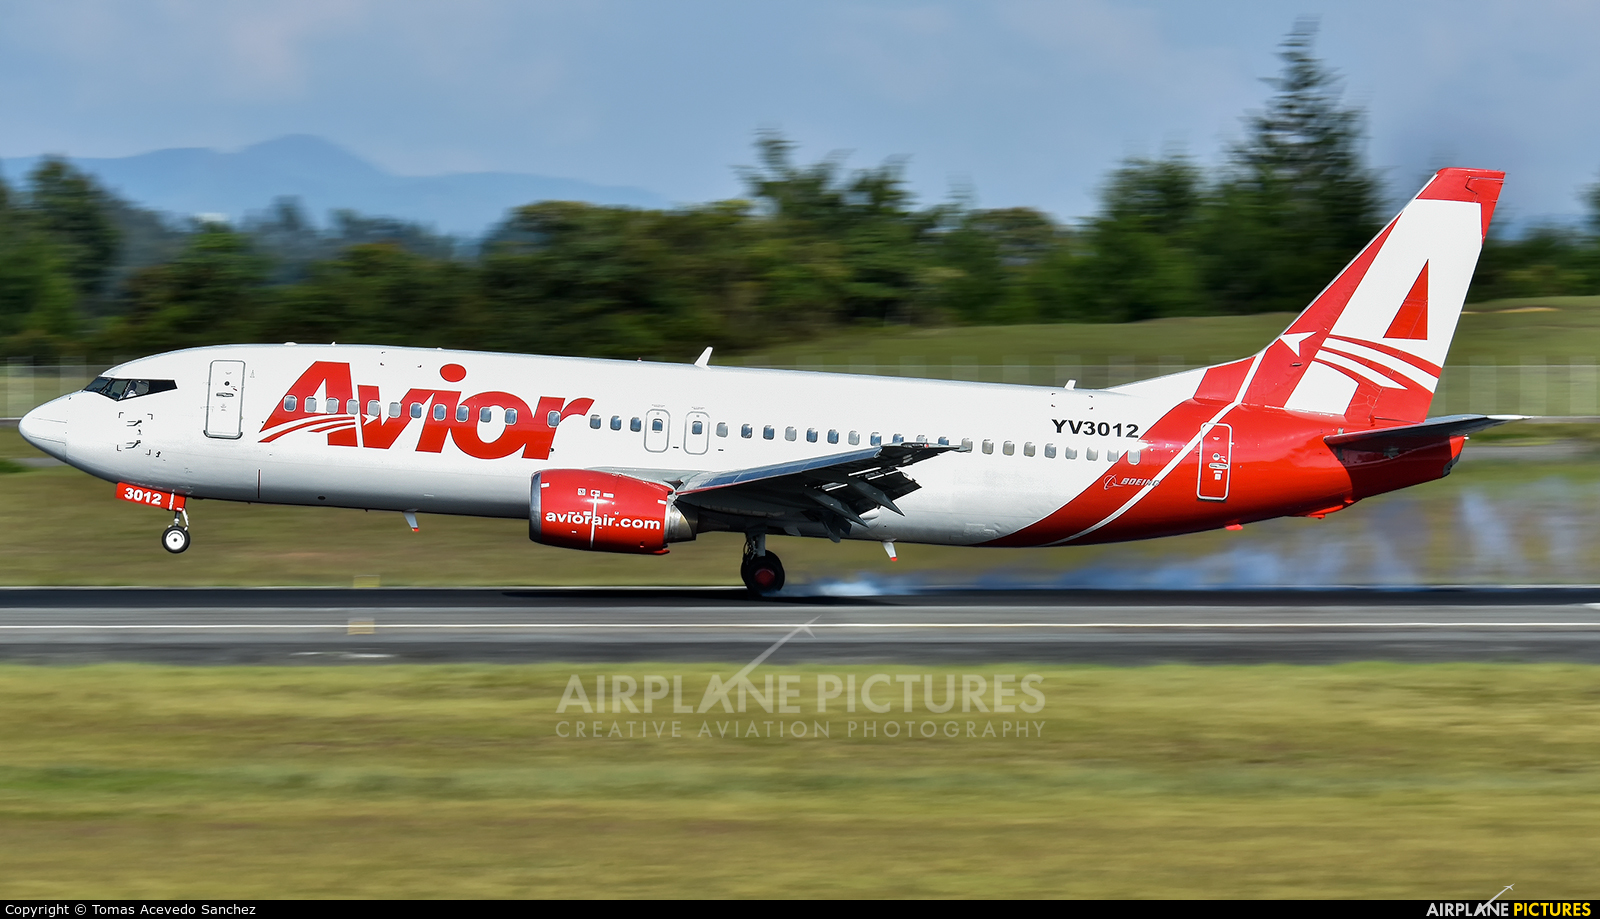 Avior Airlines YV3012 aircraft at Medellin - Jose Maria Cordova Intl